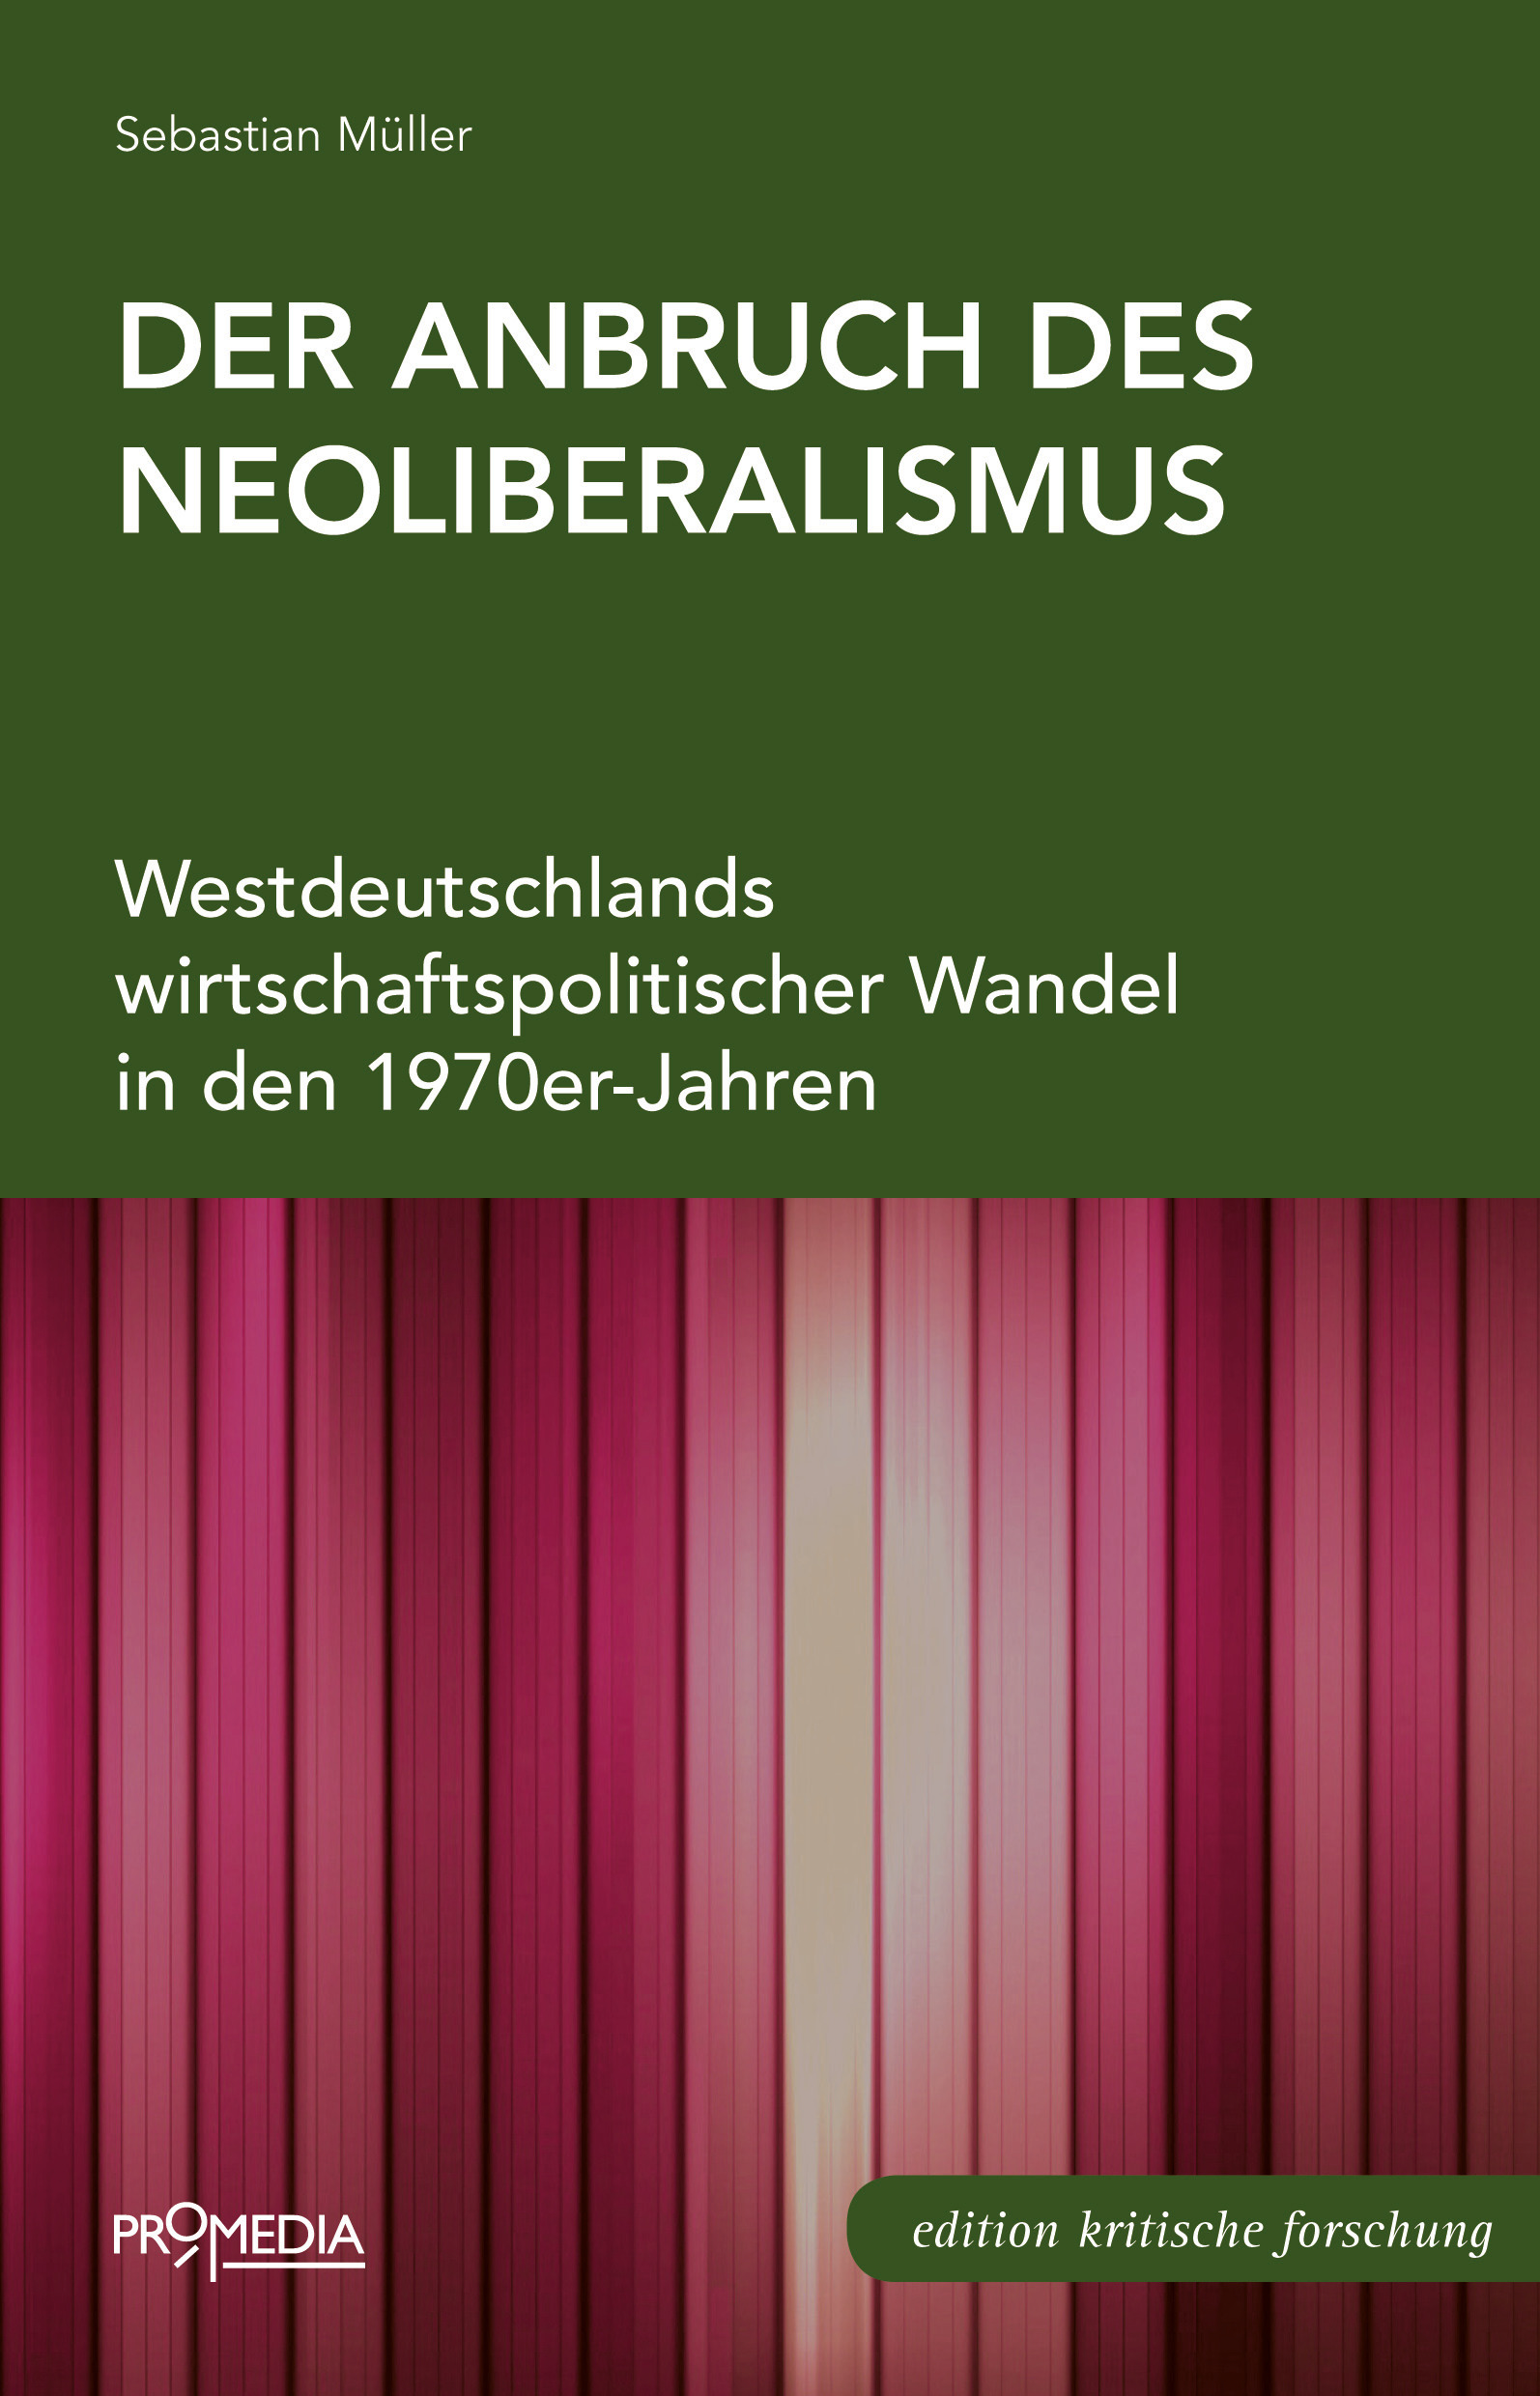 [Cover] Der Anbruch des Neoliberalismus